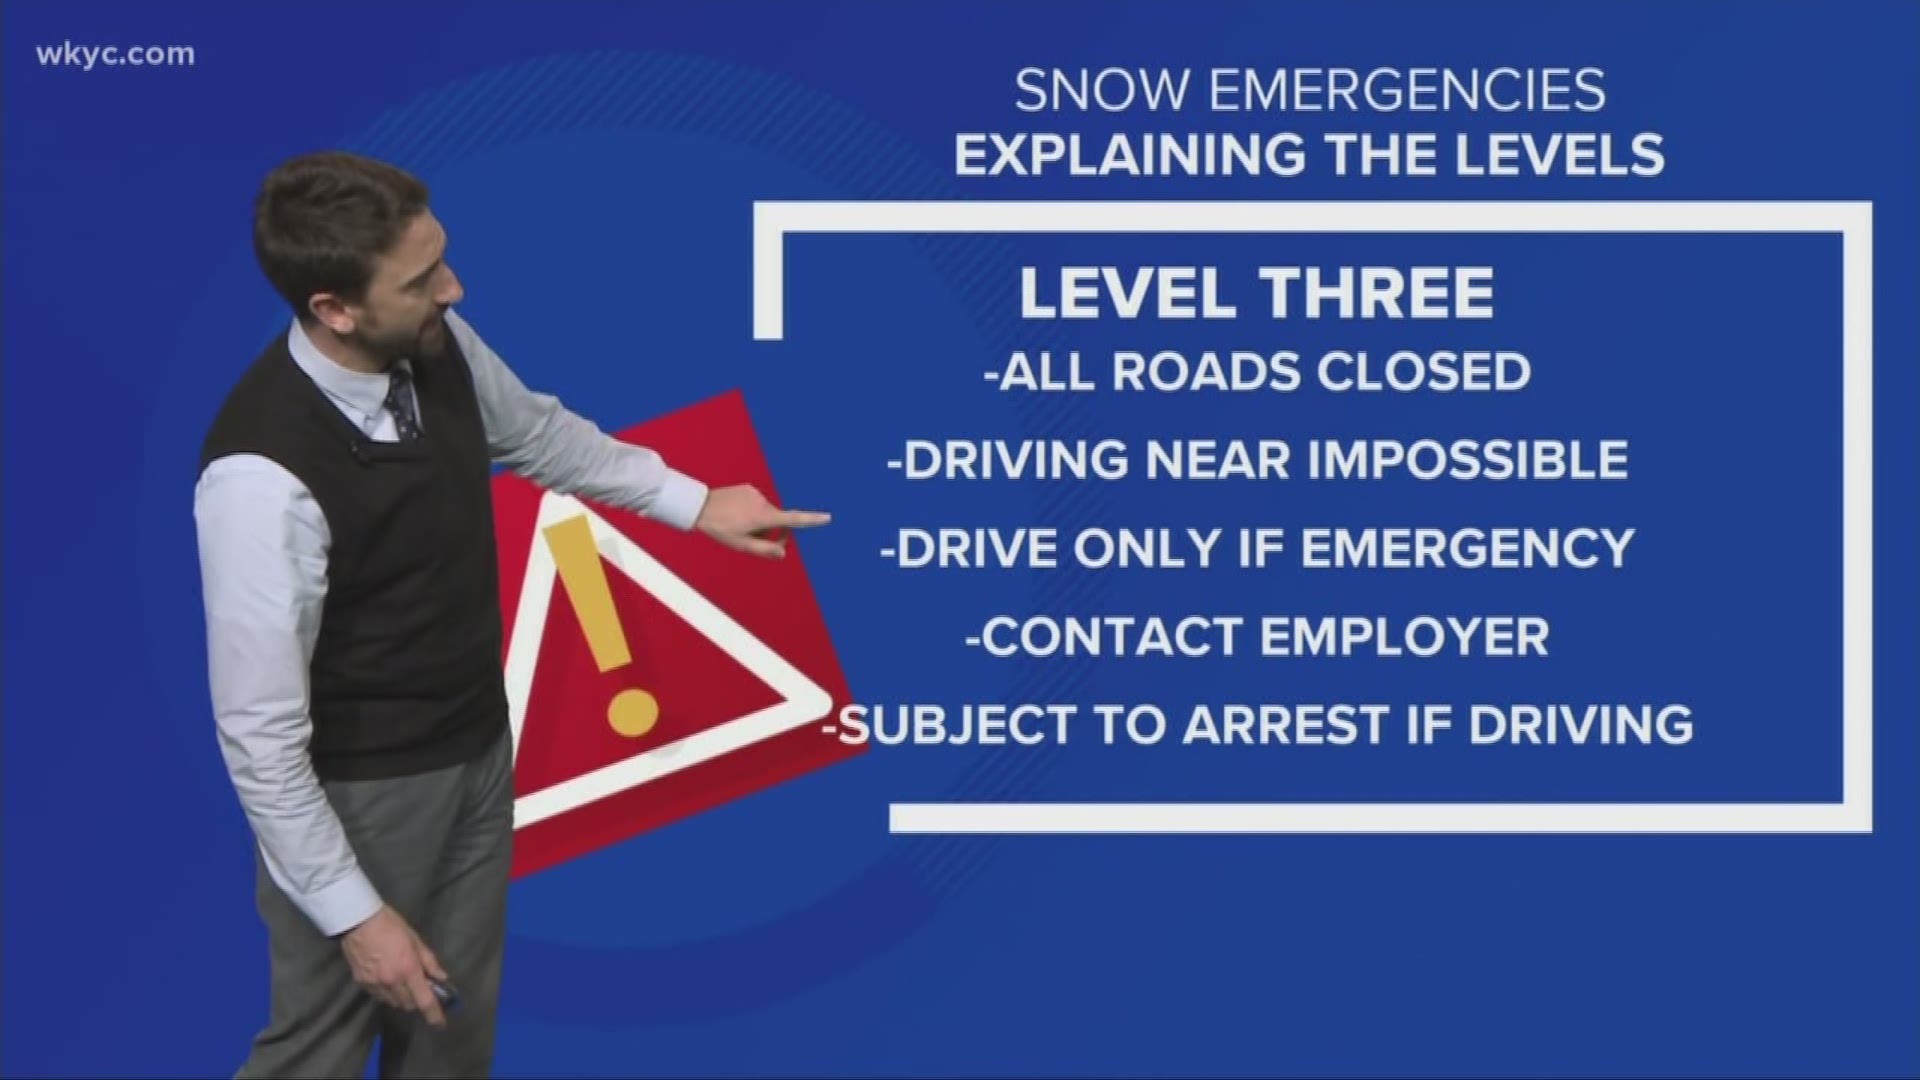 Explaining the levels of snow emergencies